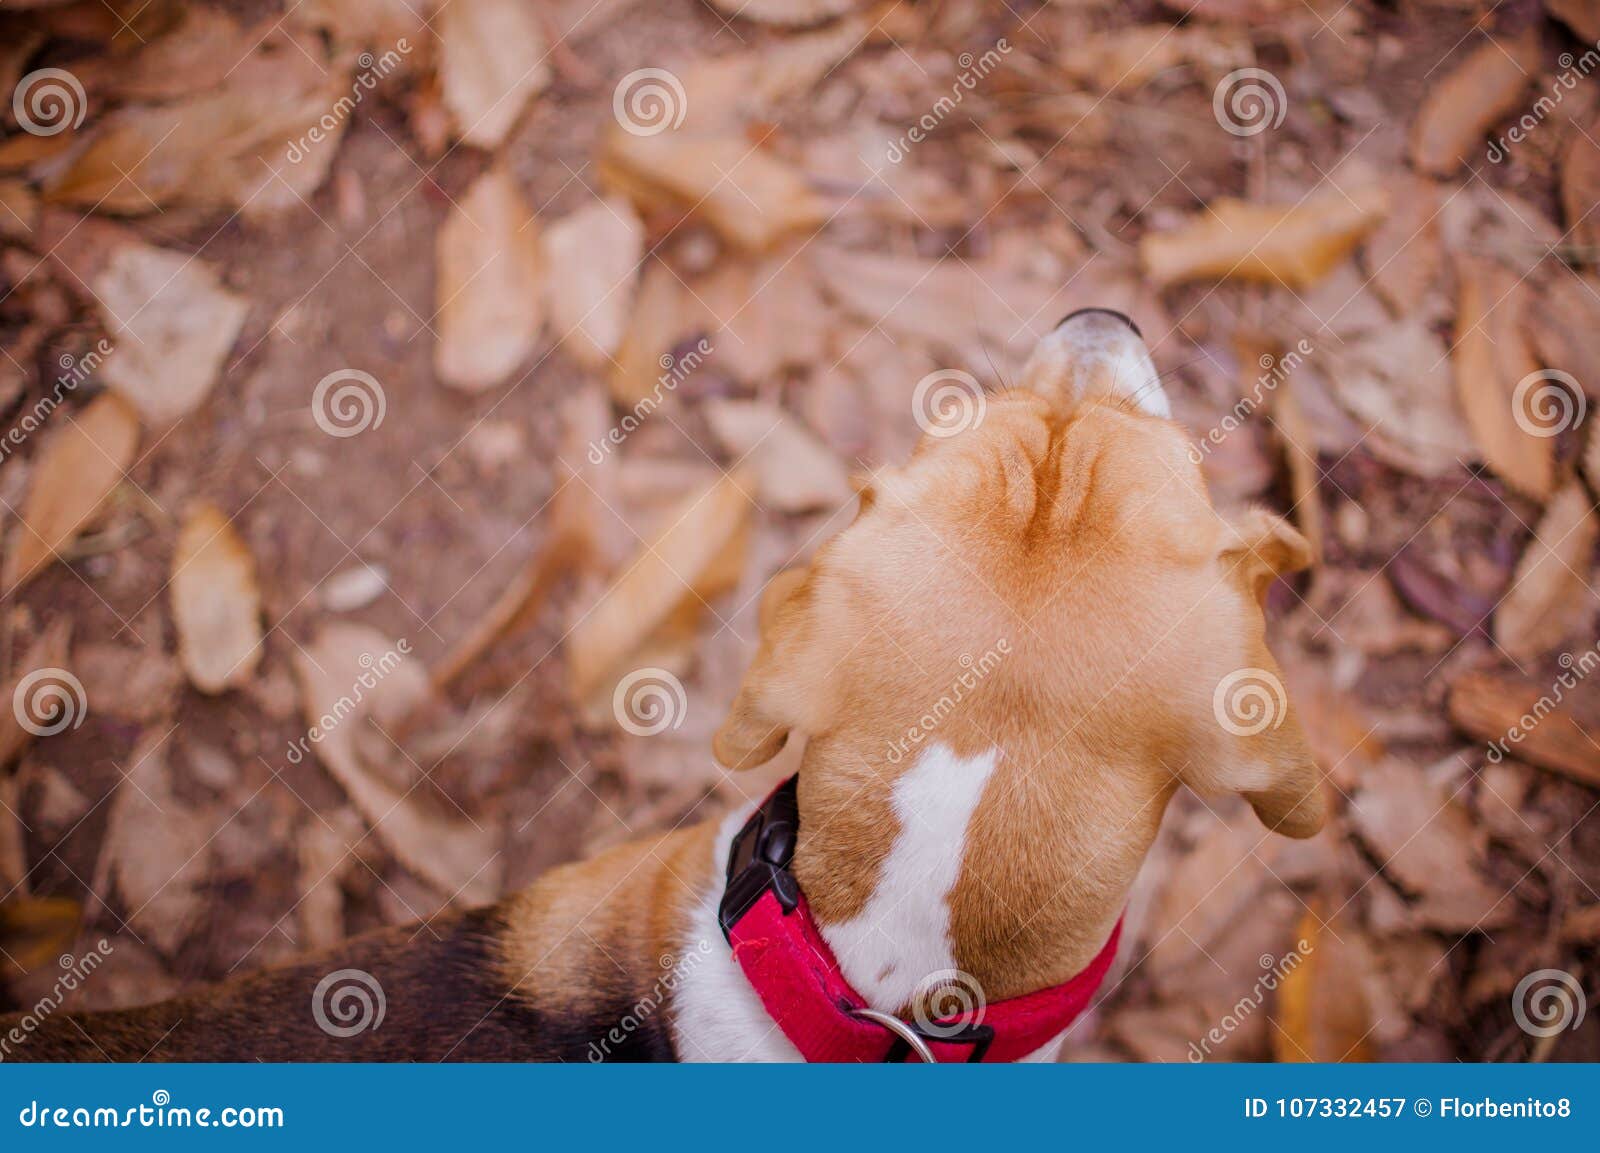 plano zenital de perro de raza beagle